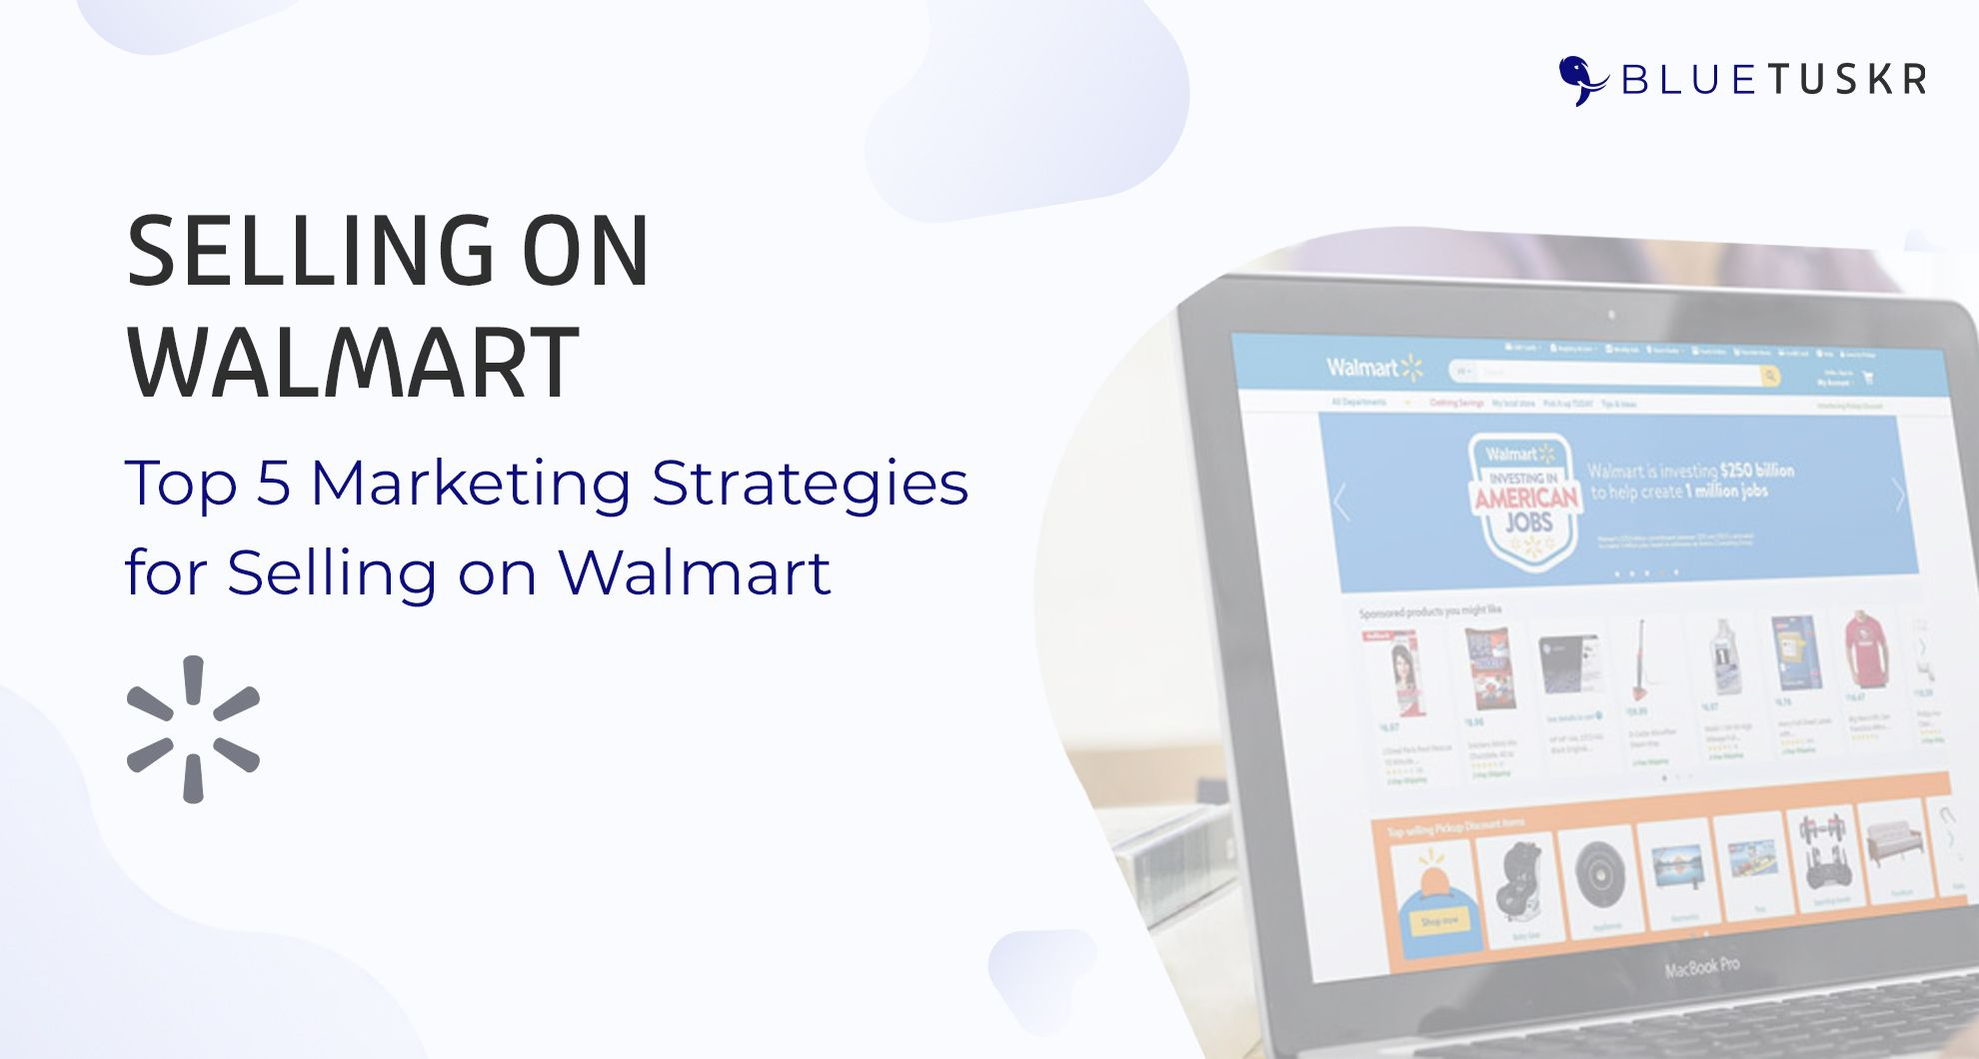 Top 5 Marketing Strategies for Selling on Walmart